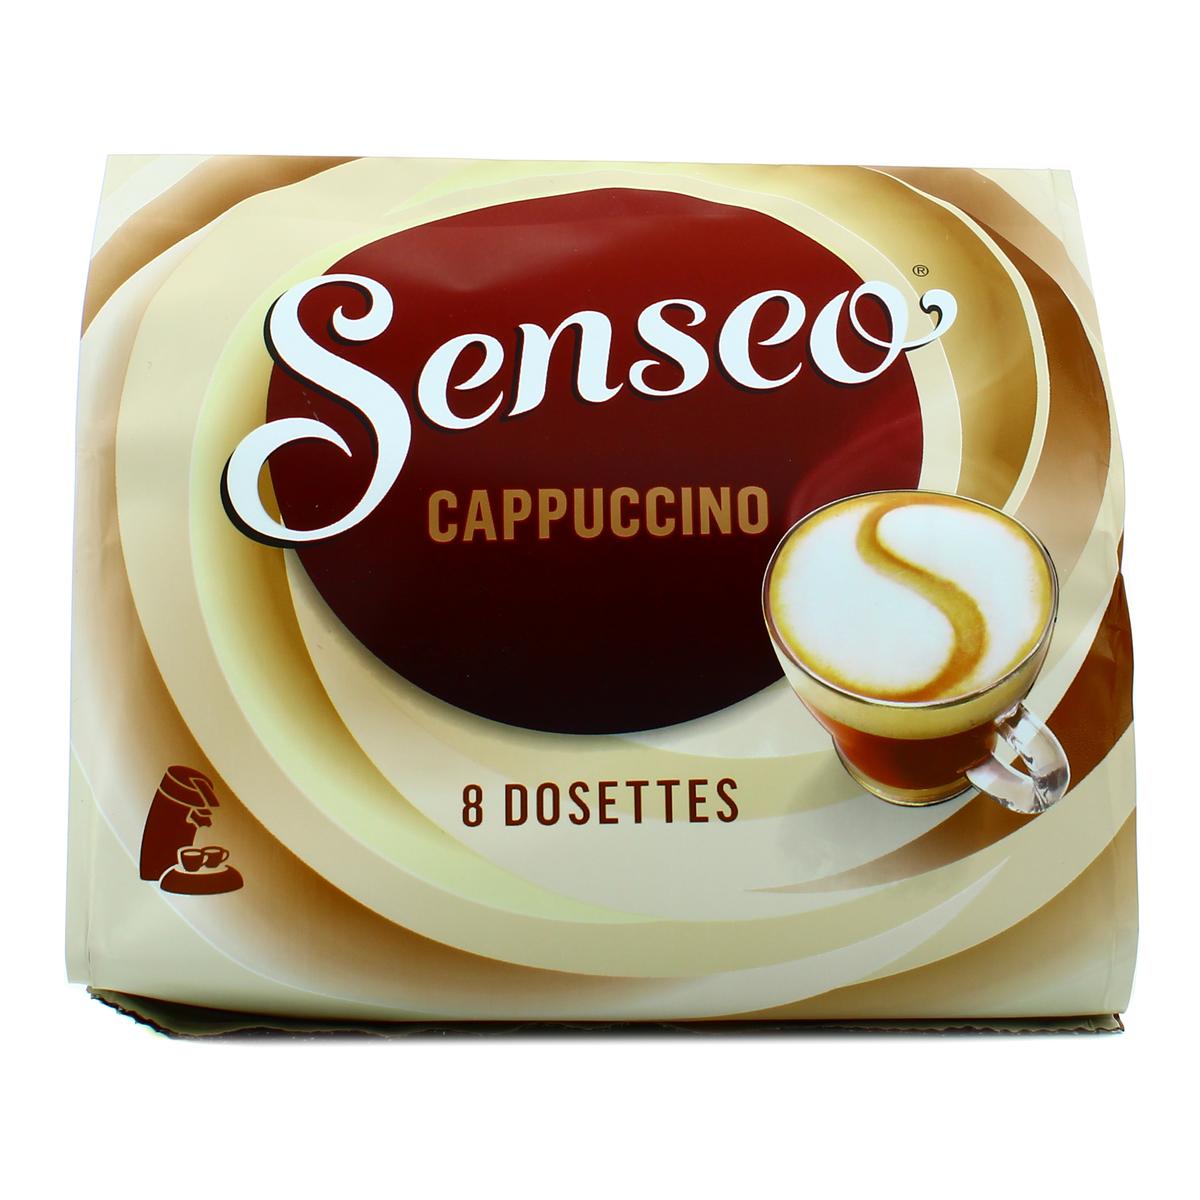 Senseo Original pour Dosettes souples